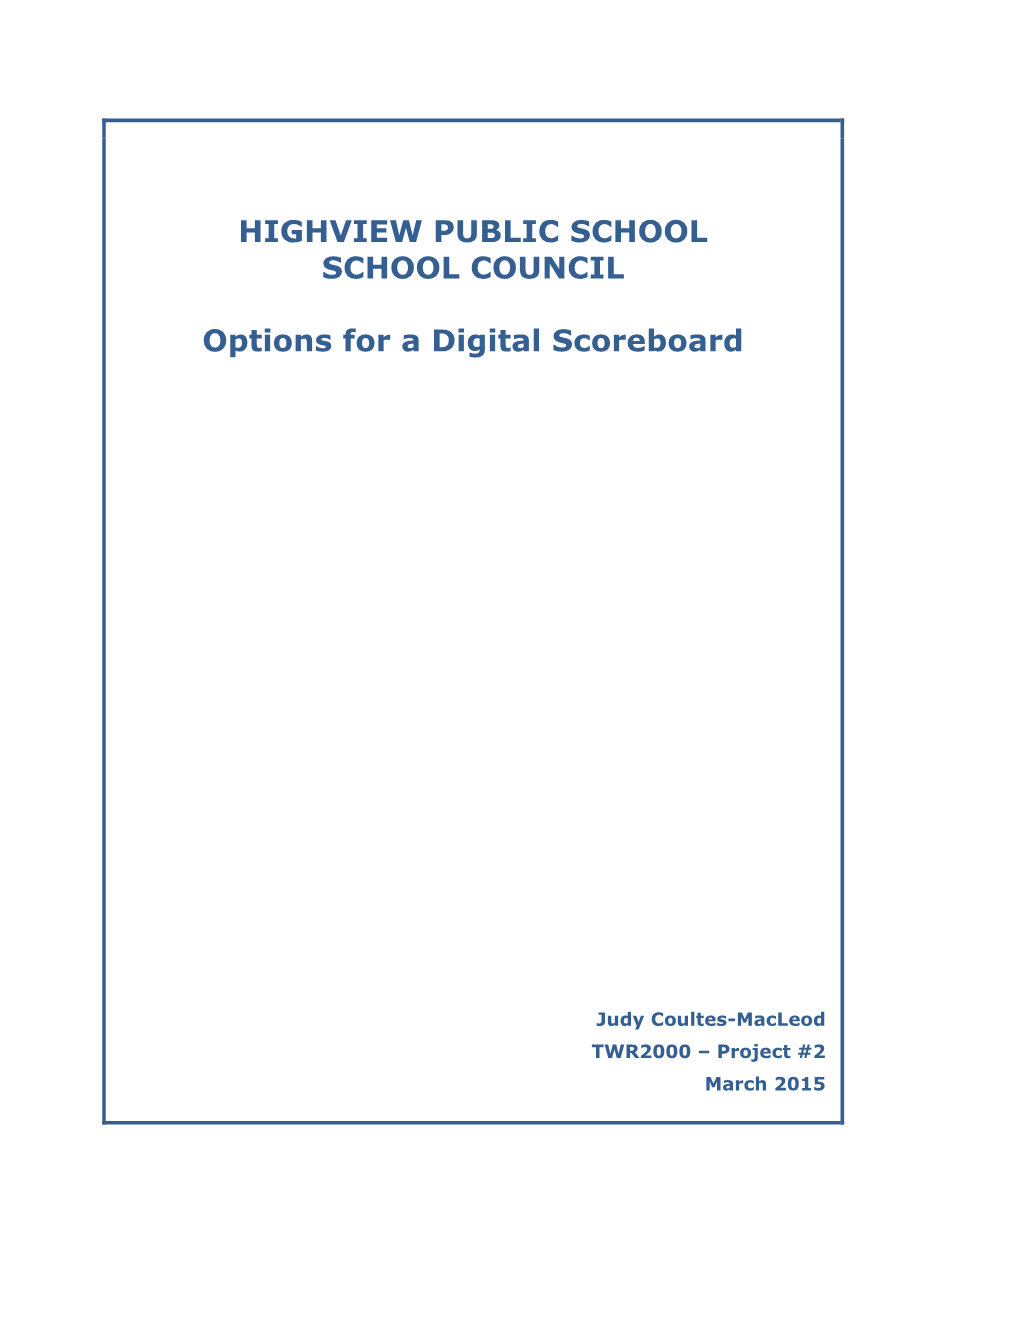 HIGHVIEW PUBLIC SCHOOL SCHOOL COUNCIL Options for A